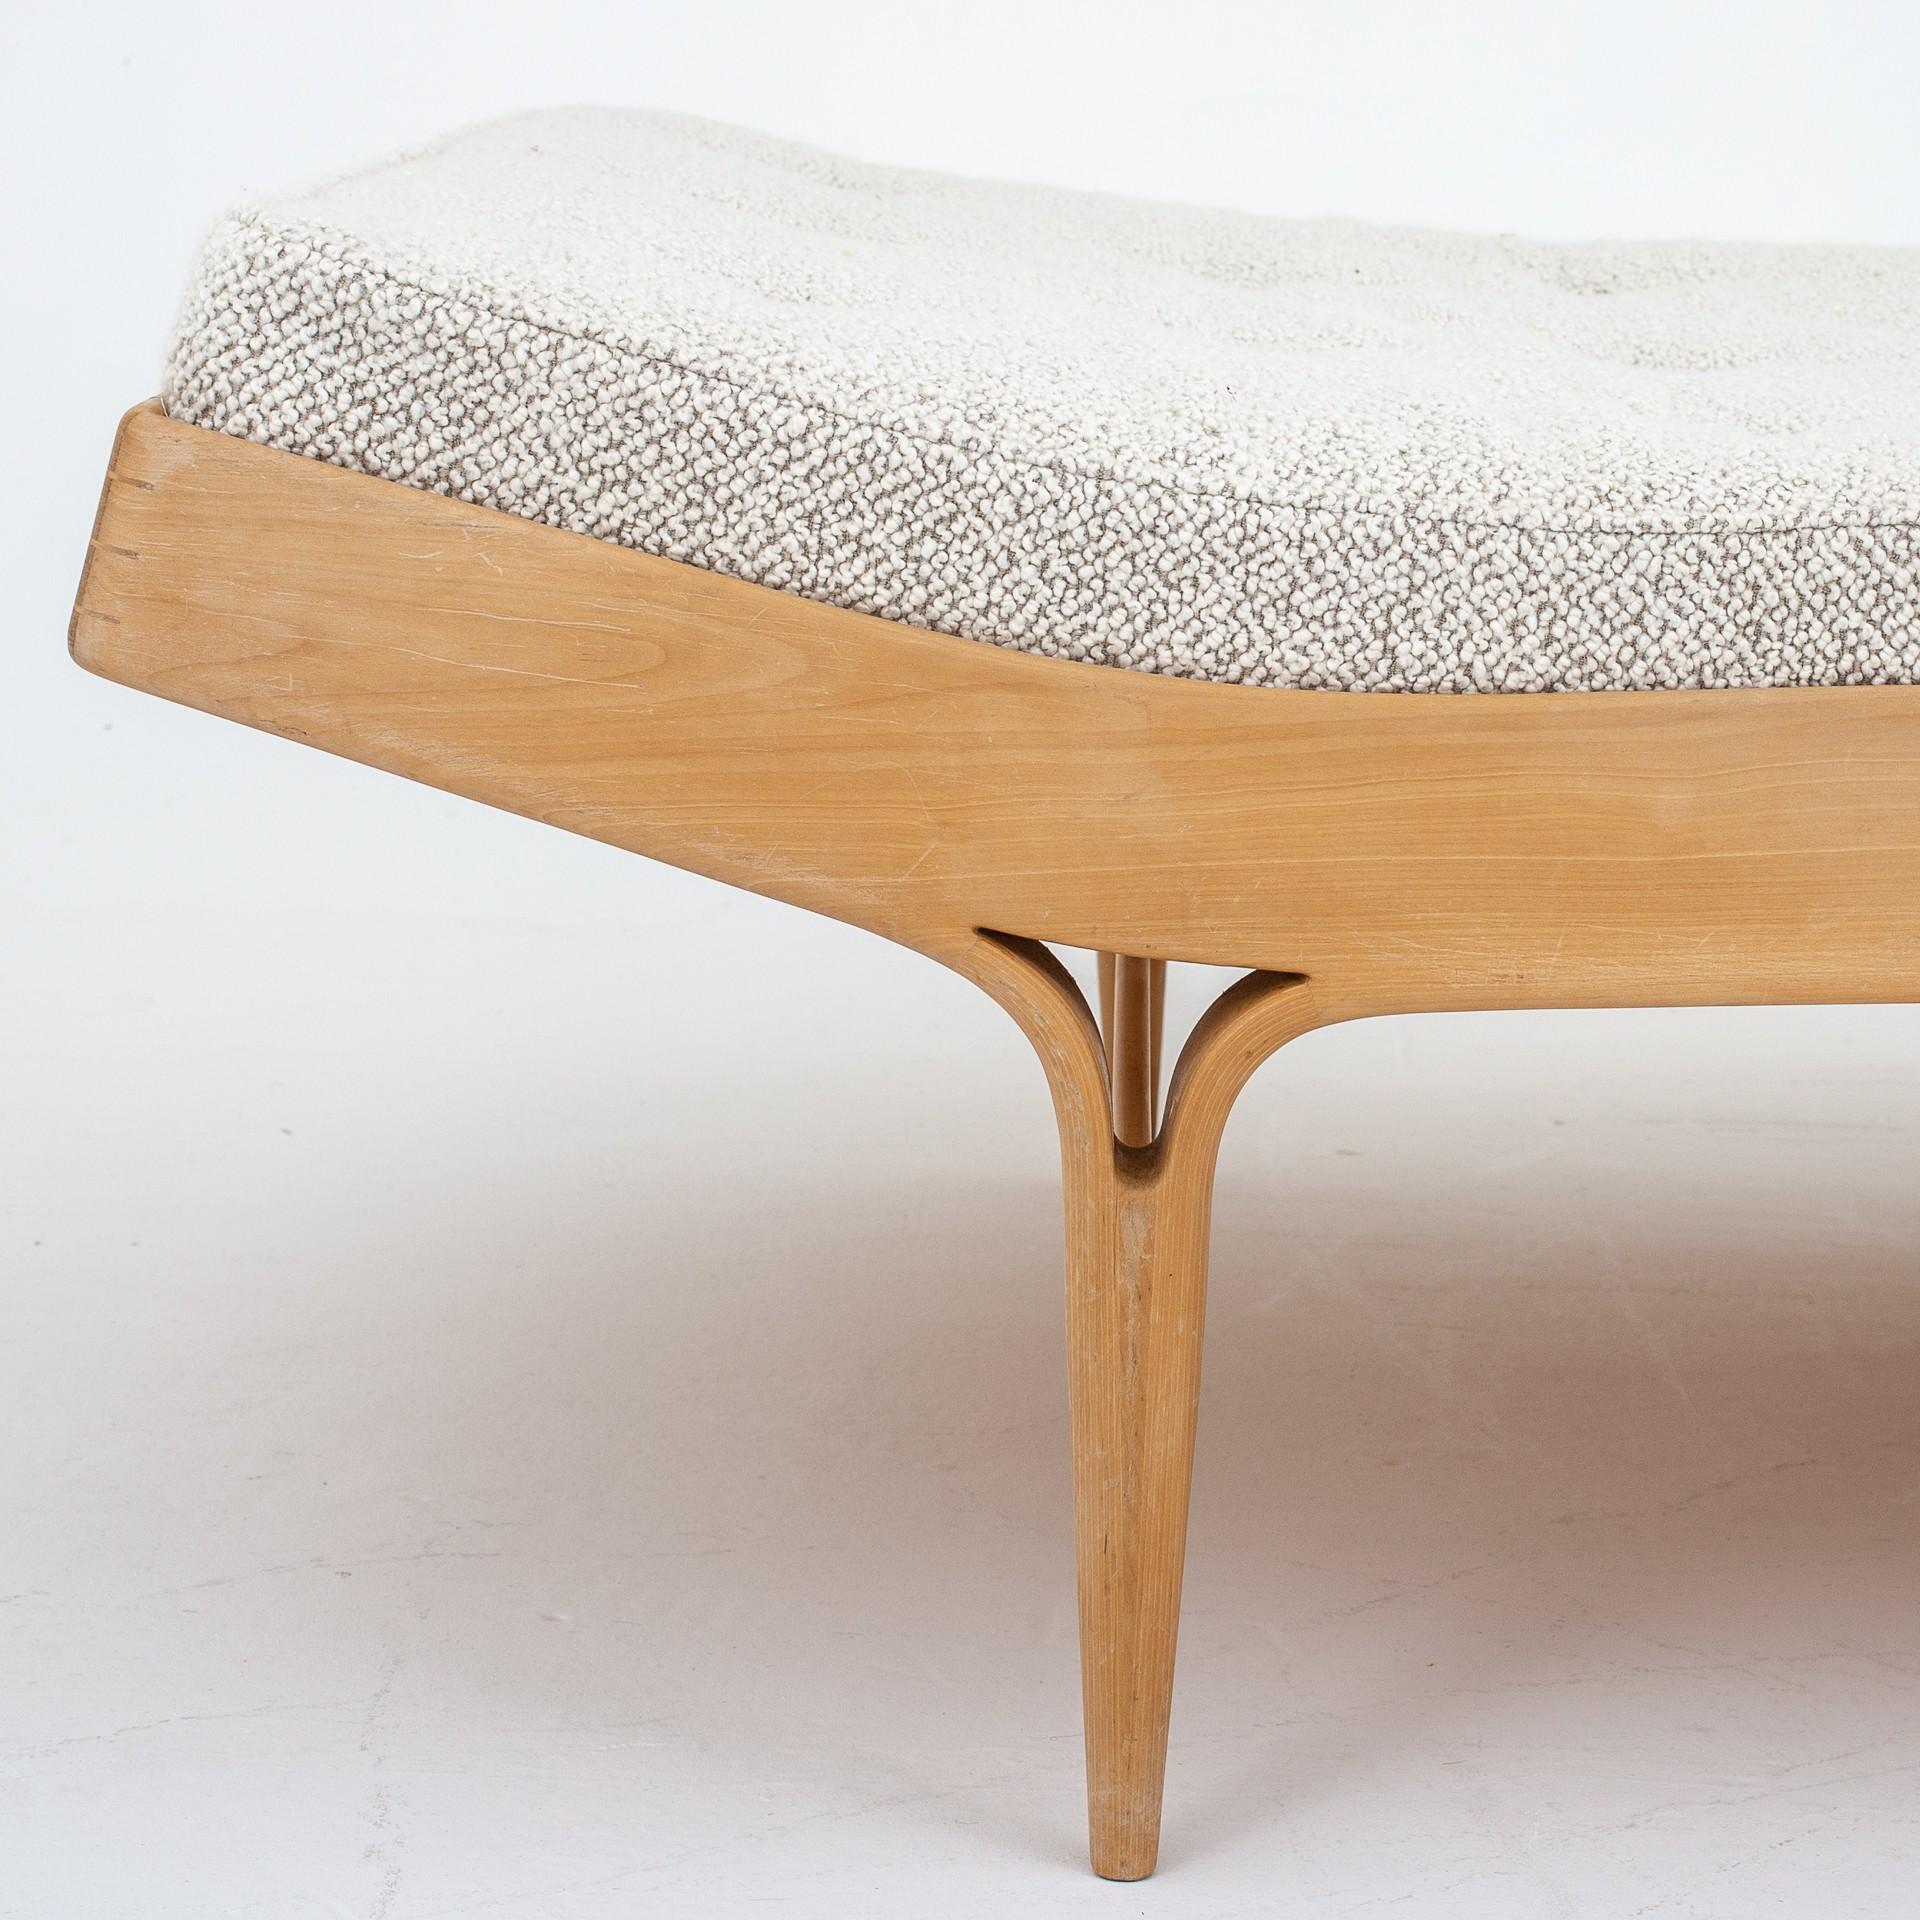 Deybed in maple with reupholstered mattress in Pierre Frey wool. Maker Karl Mathsson.